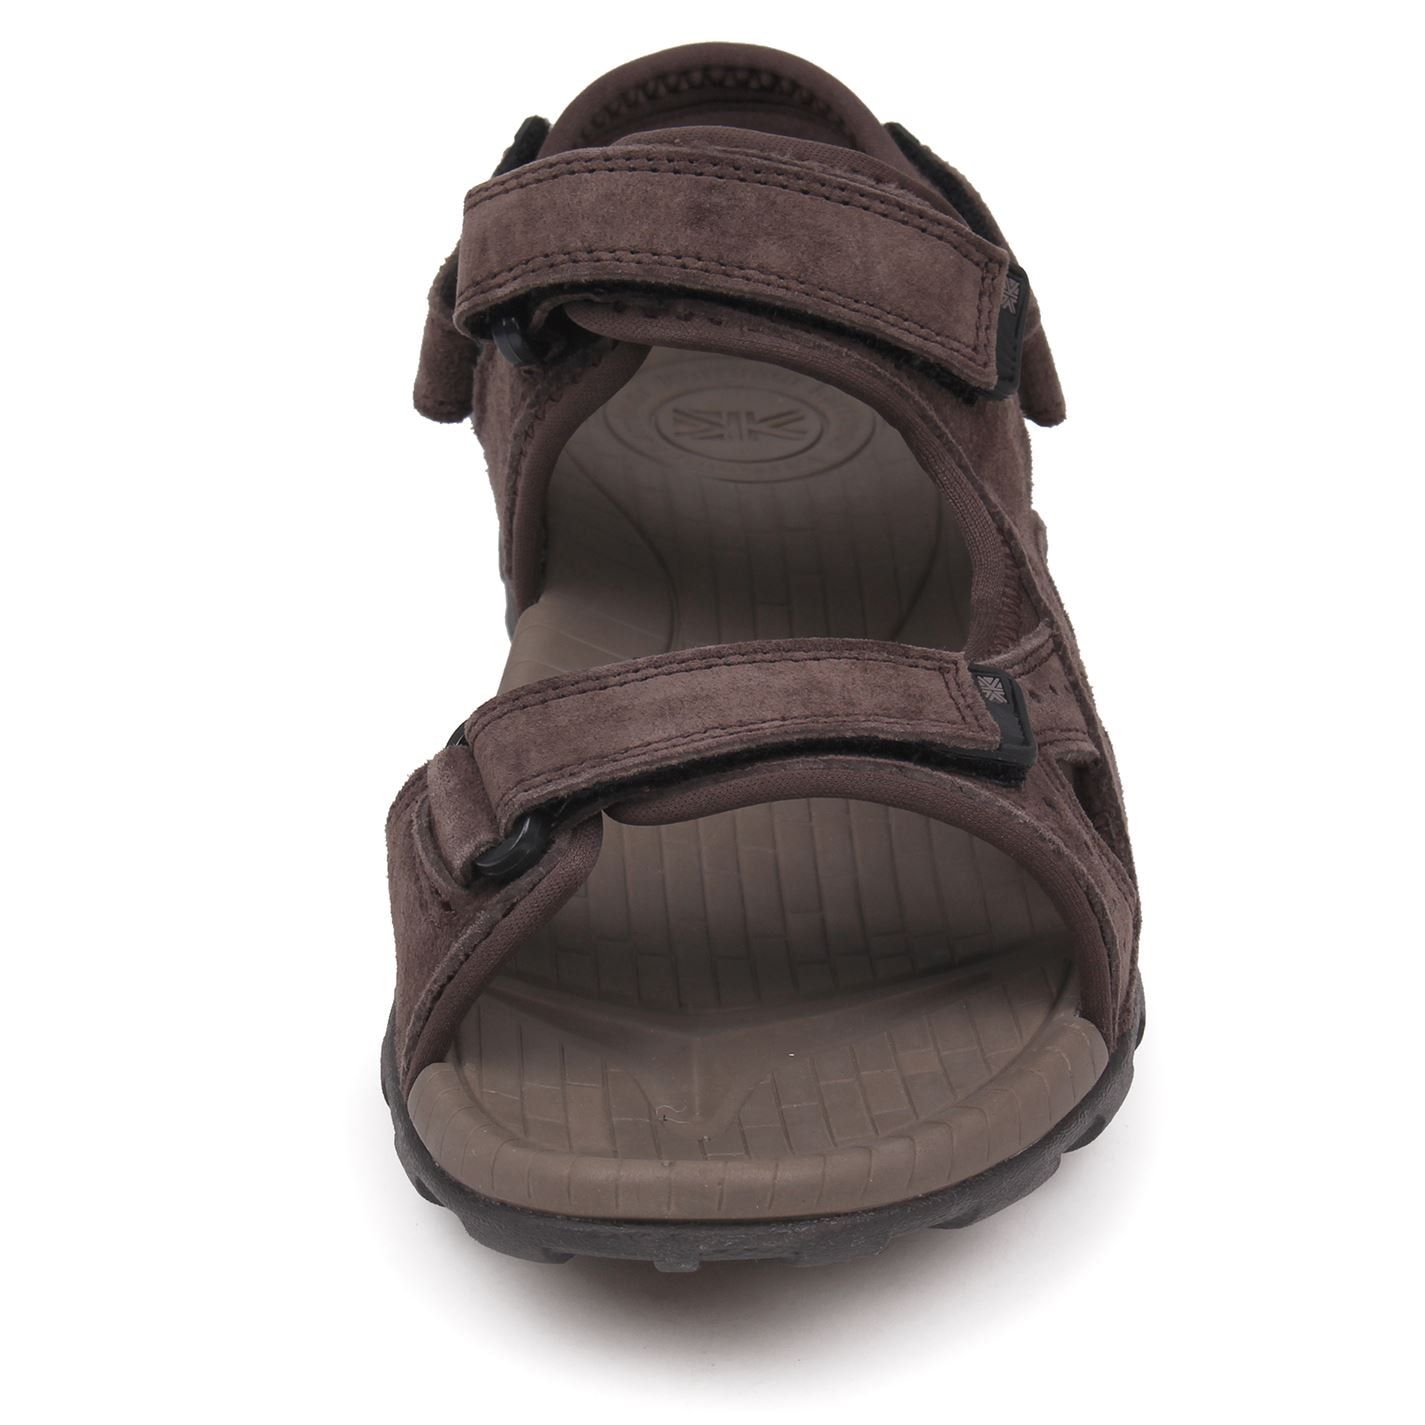 Karrimor Mens Antibes Leather Walking Sandals Sport Hiking Summer Shoes 